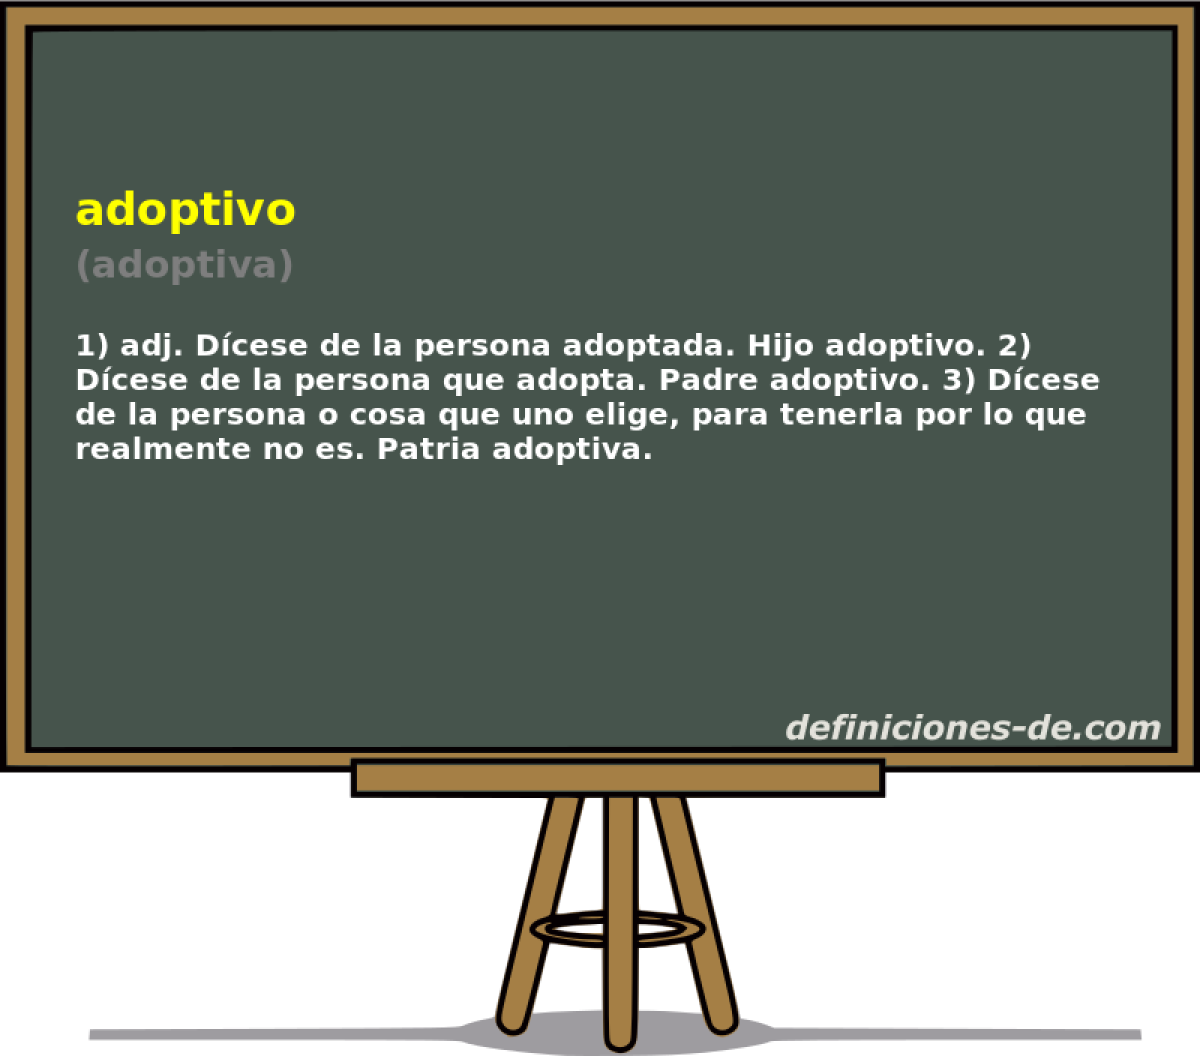 adoptivo (adoptiva)